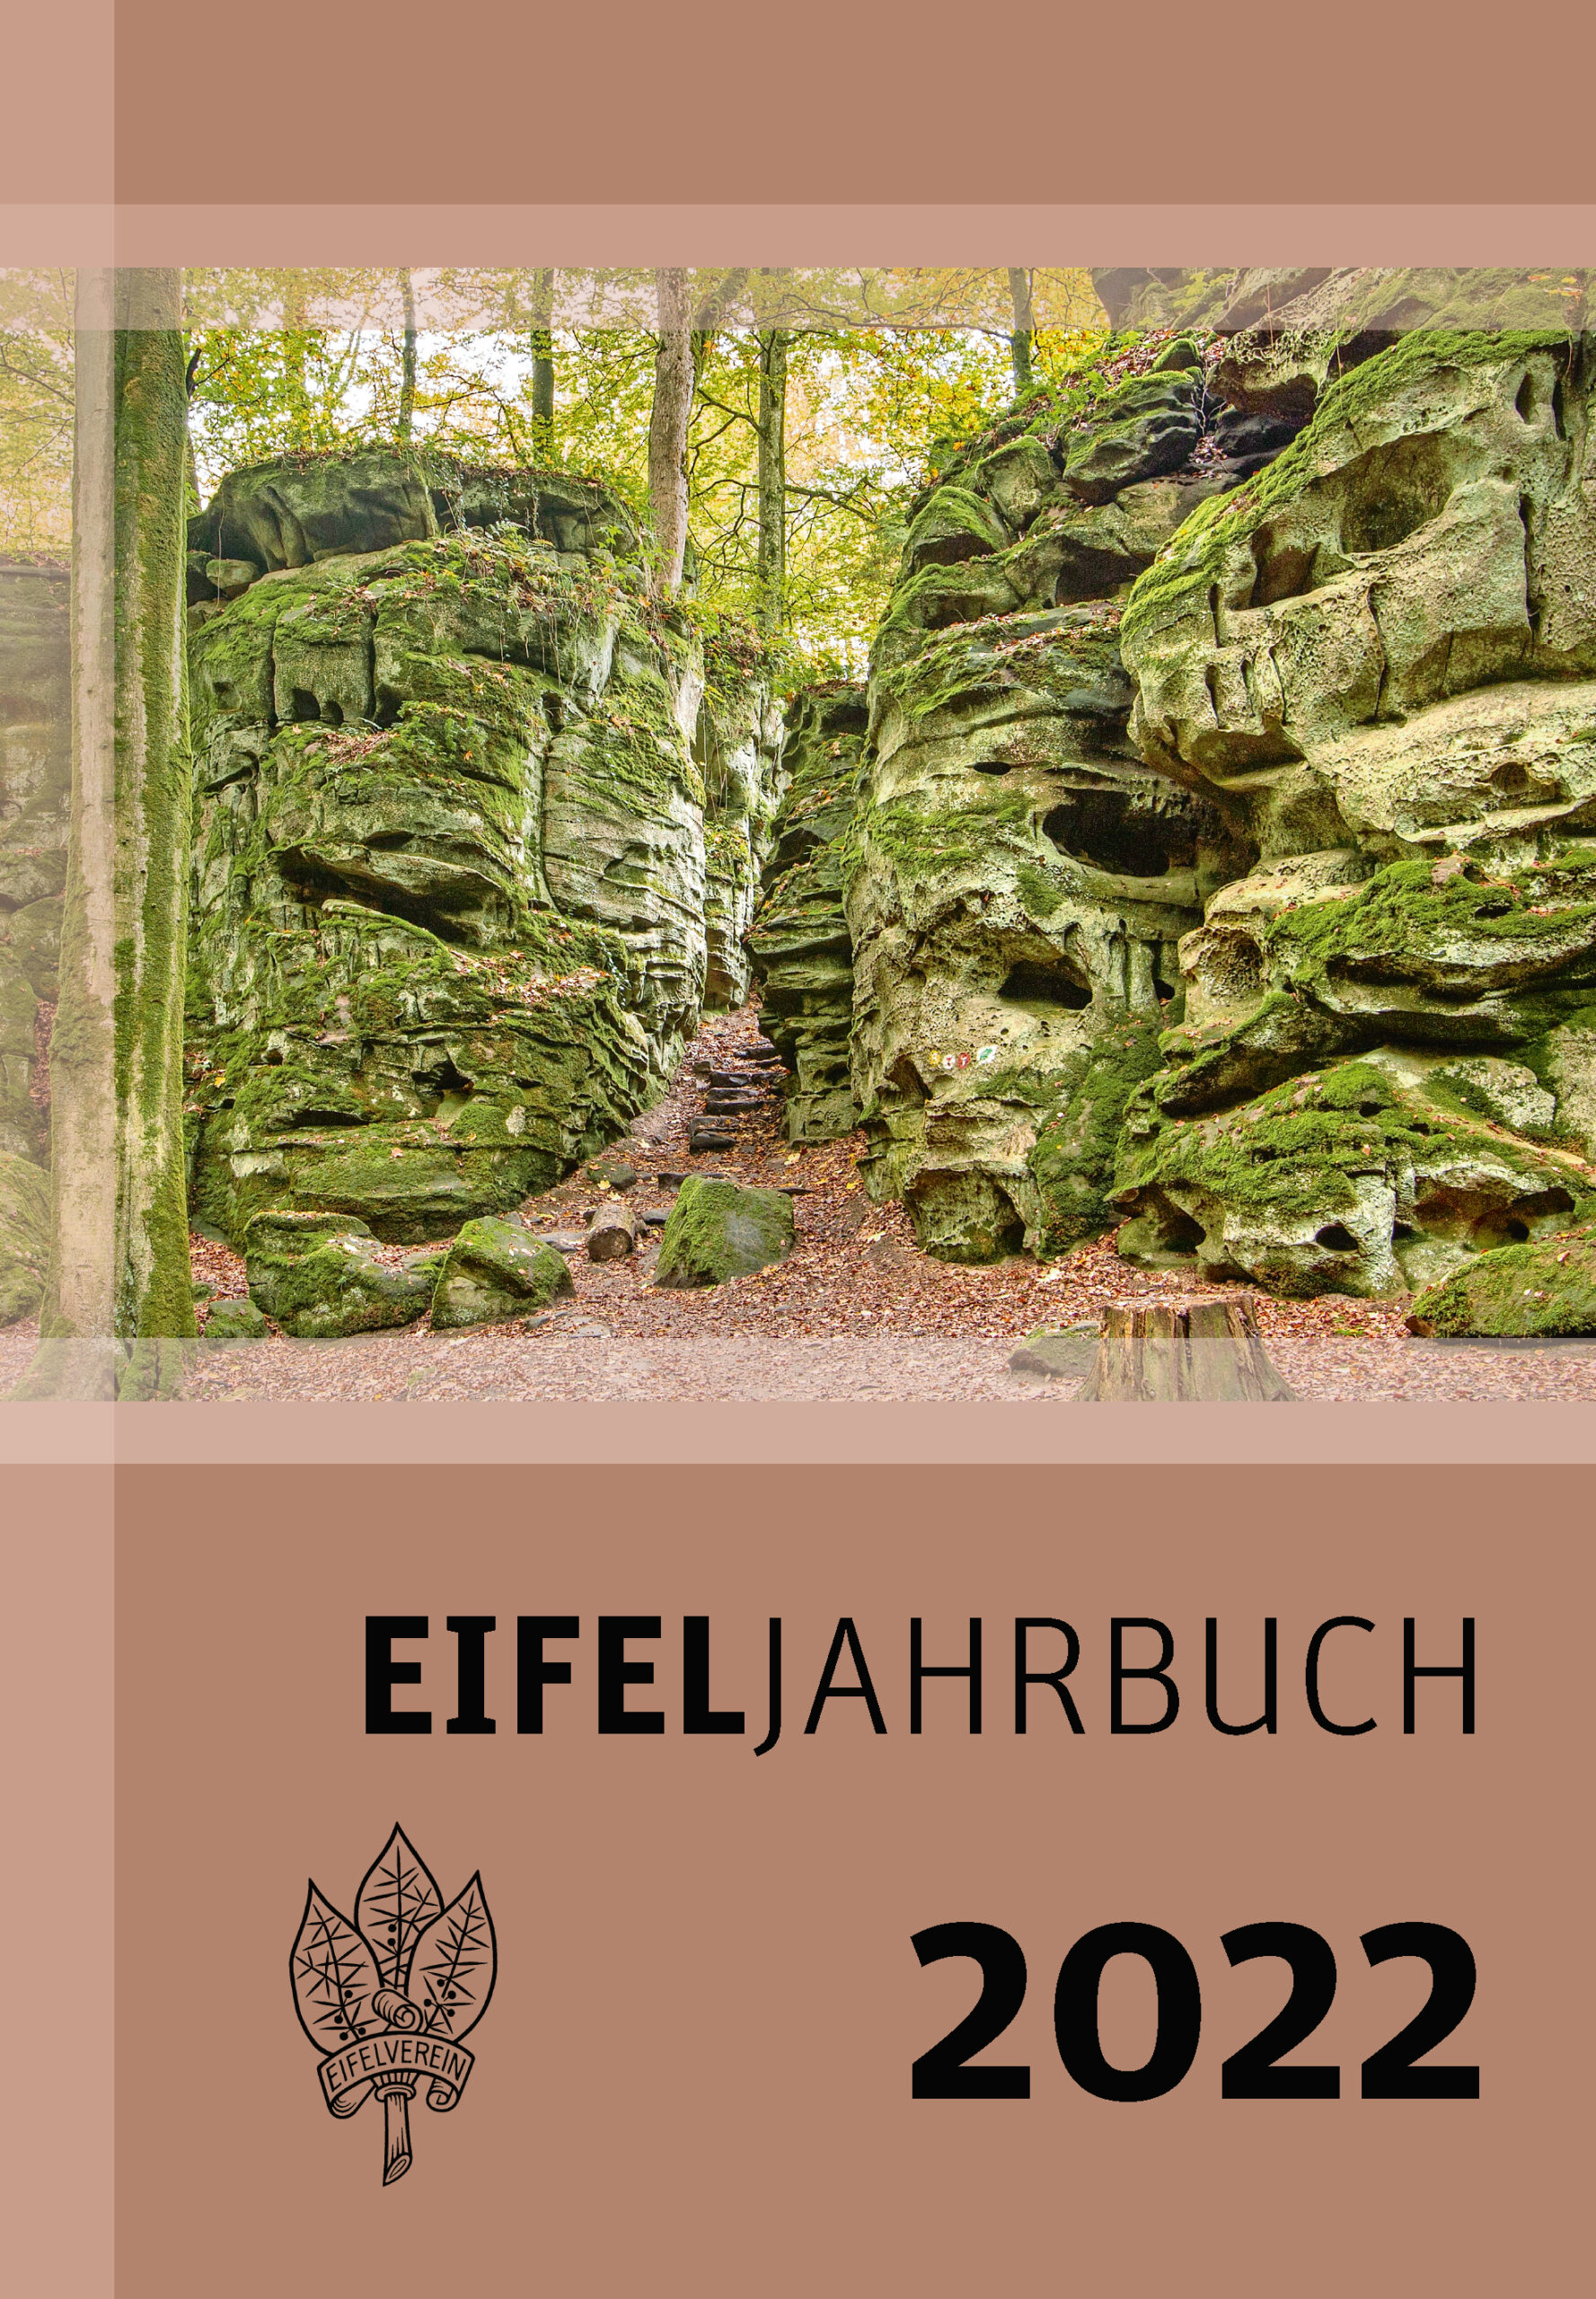 Geschenktipp: Eifeljahrbuch